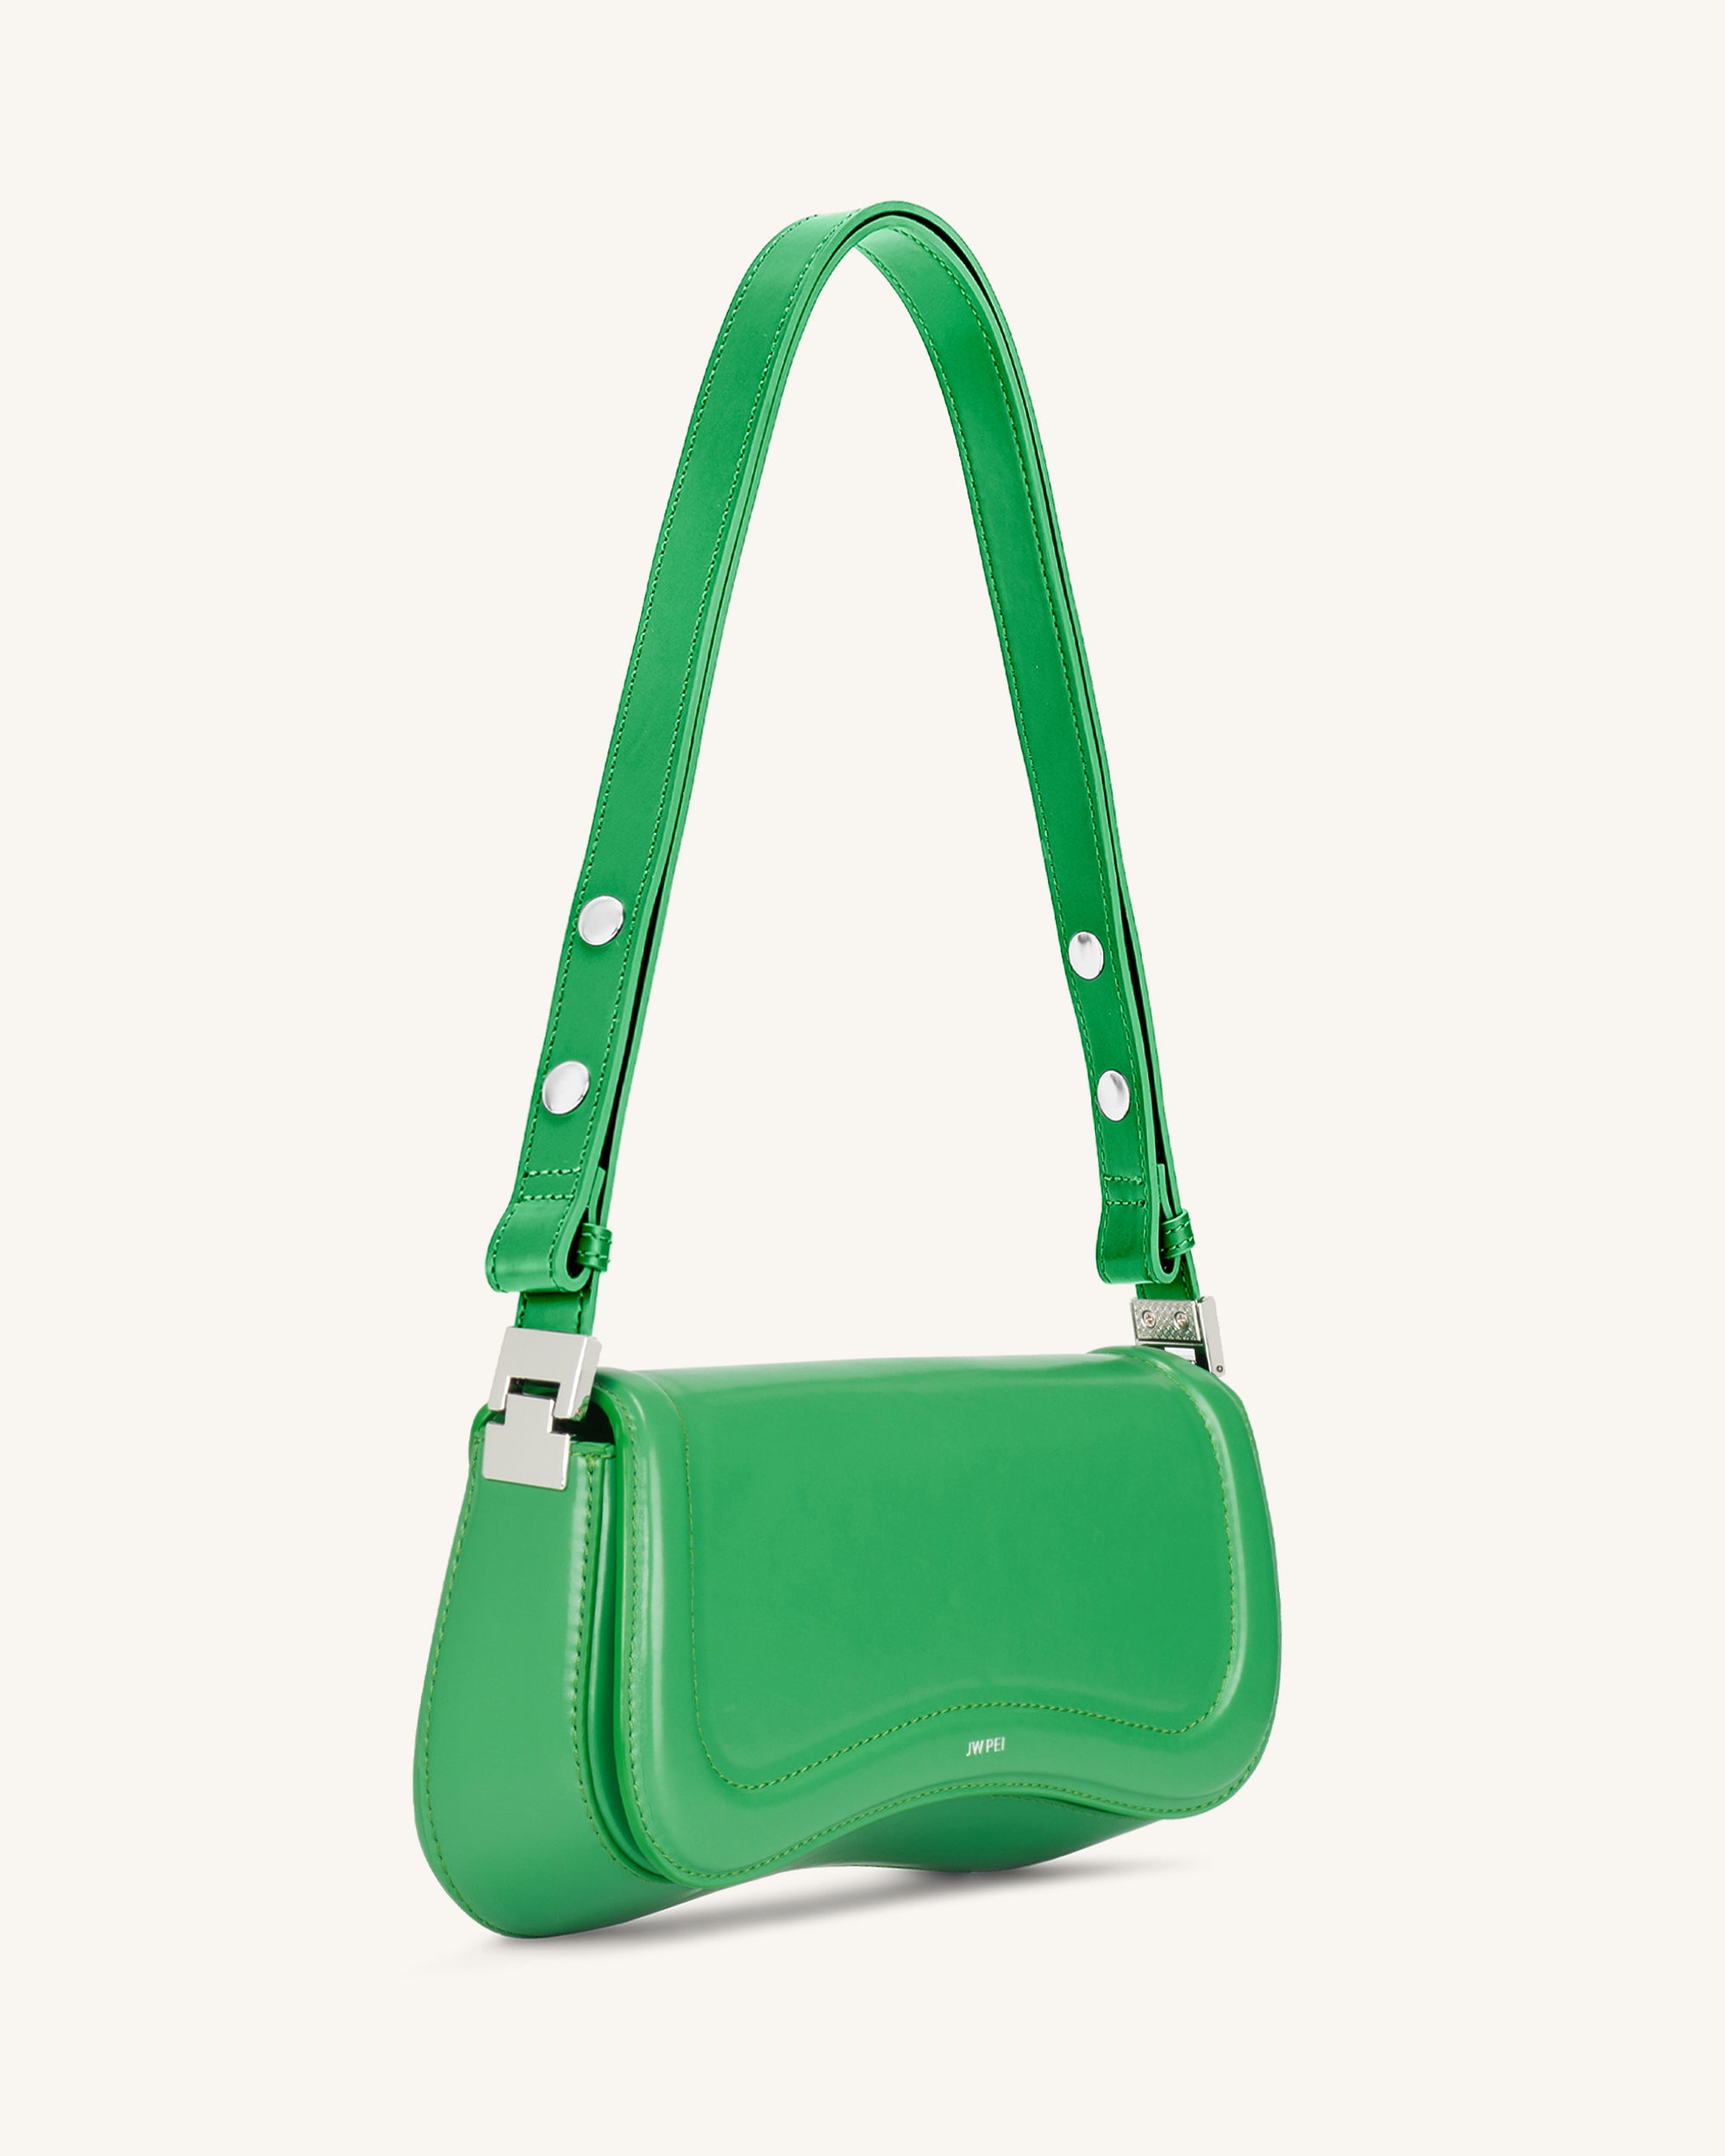 JW PEI Gabbi bag for Women - Green in Oman